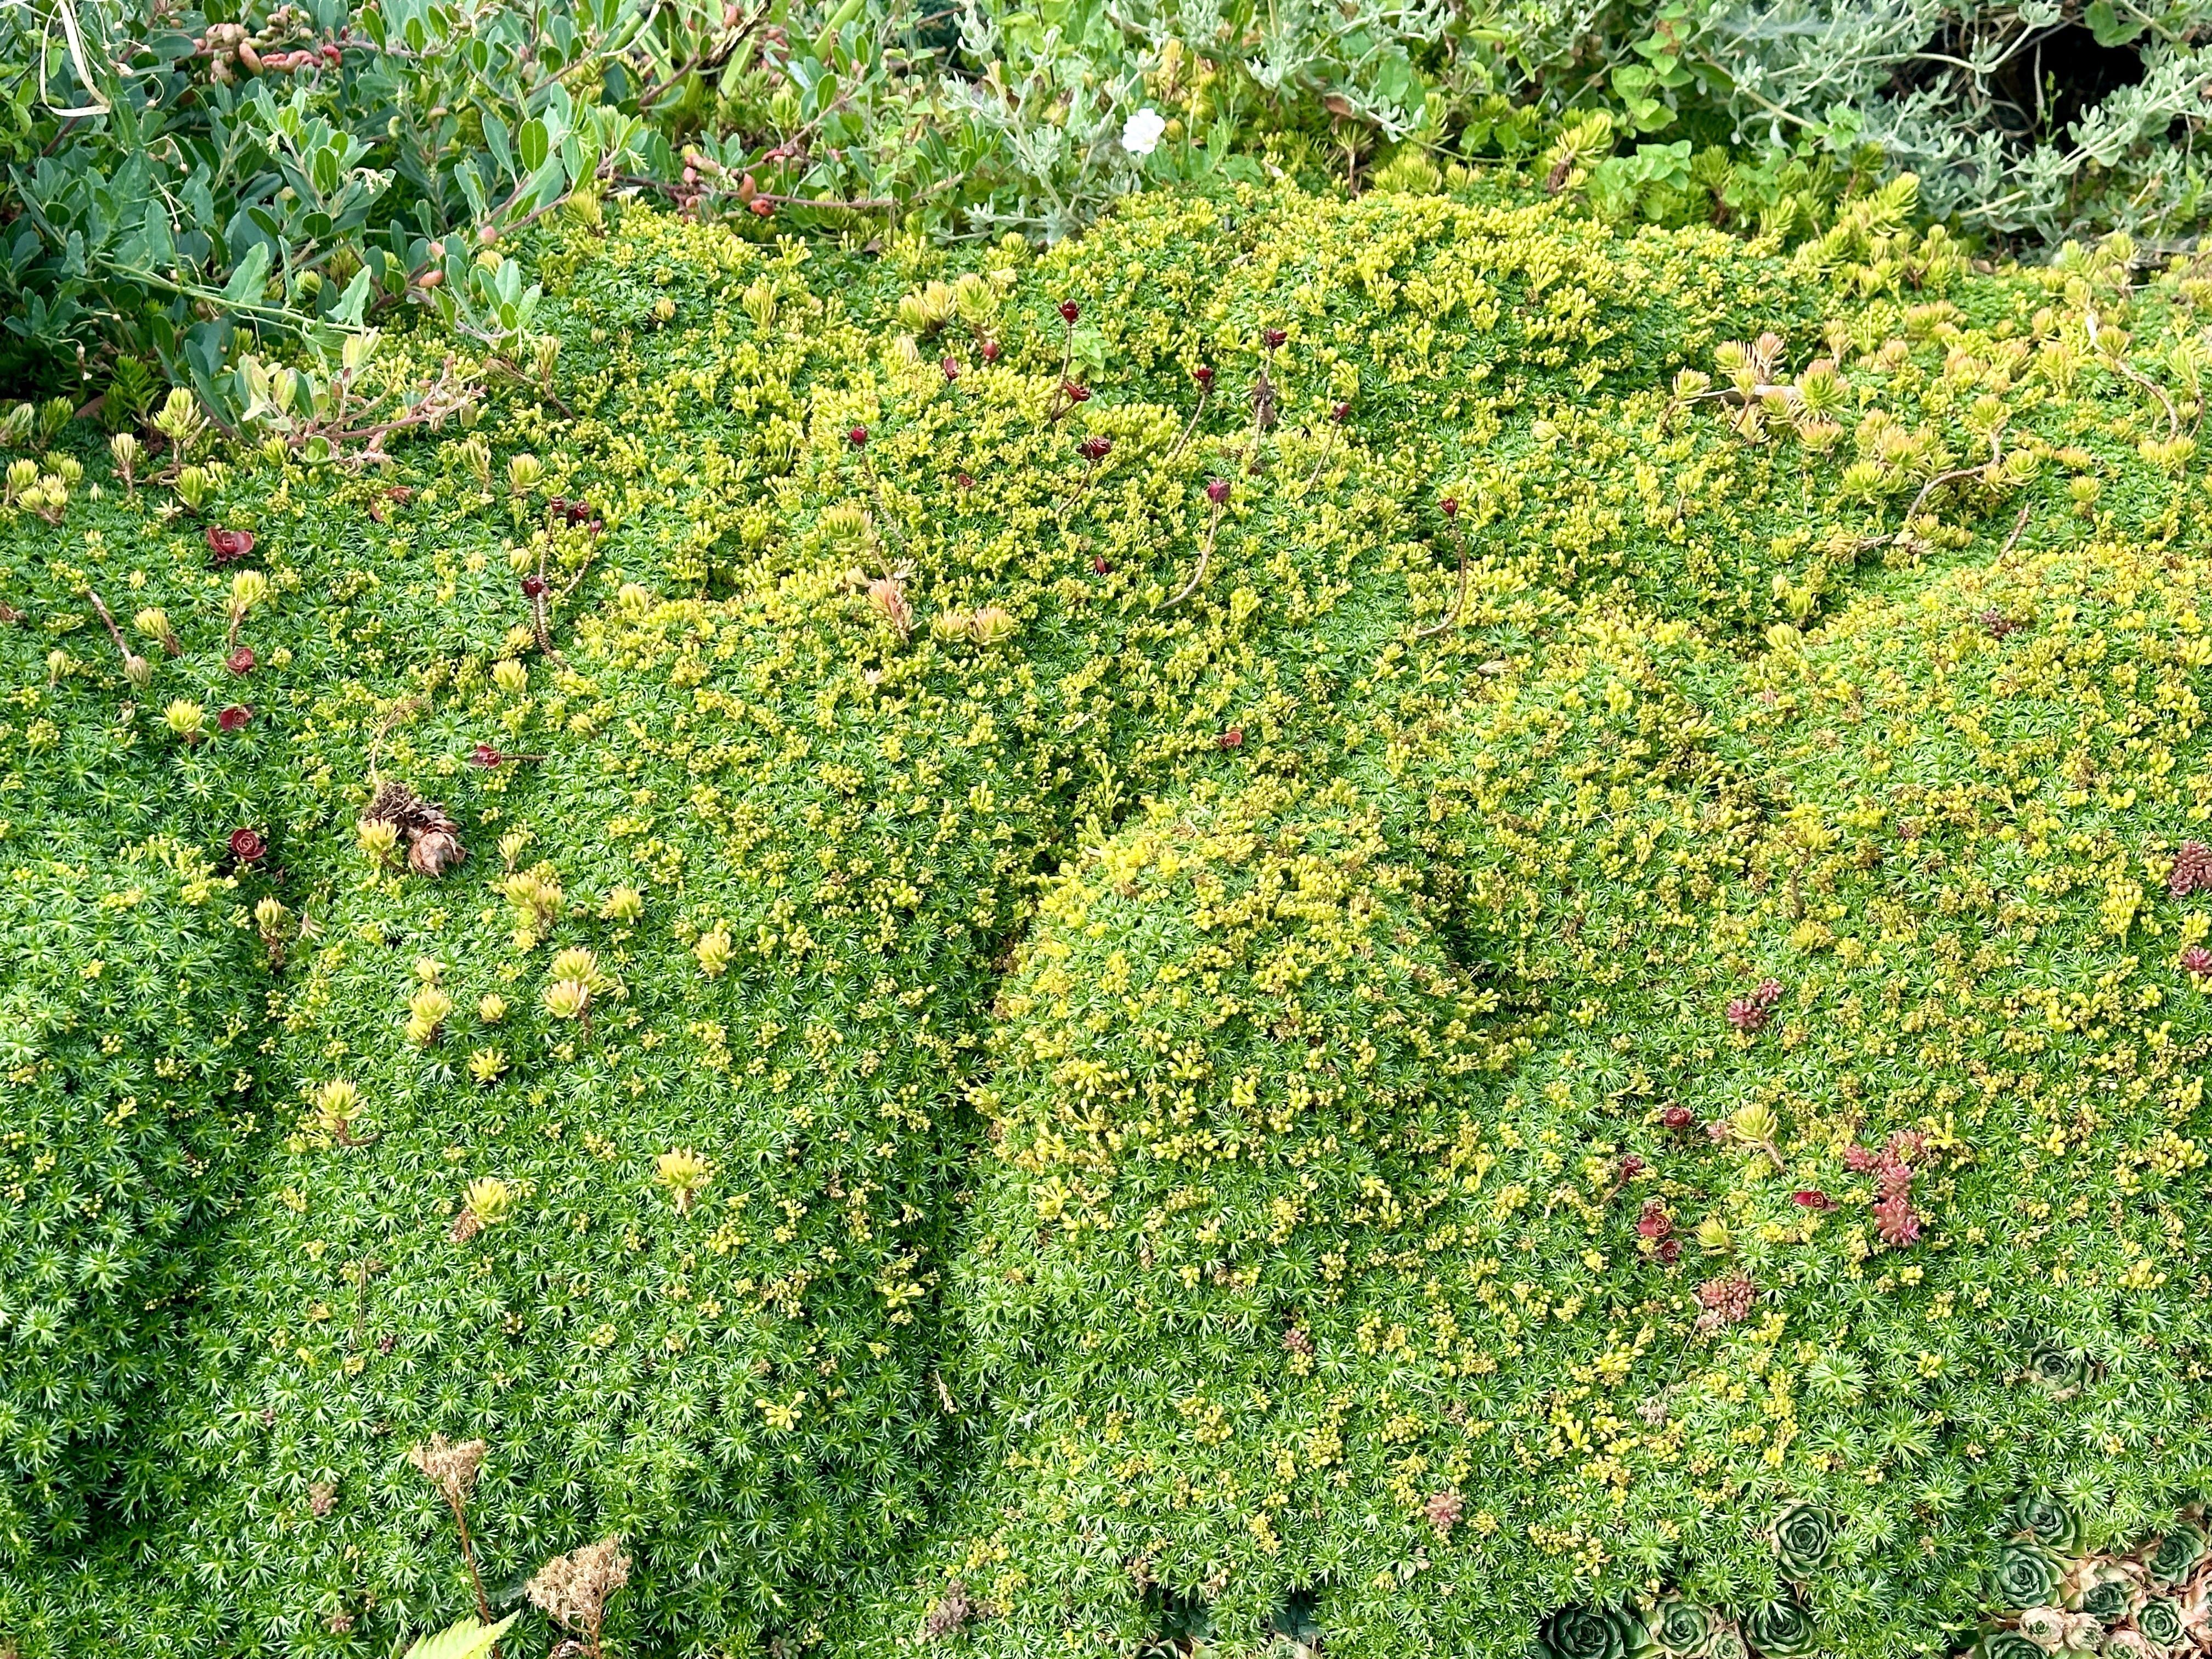 Seriously mat forming Azorella trifurcata. It's springy.